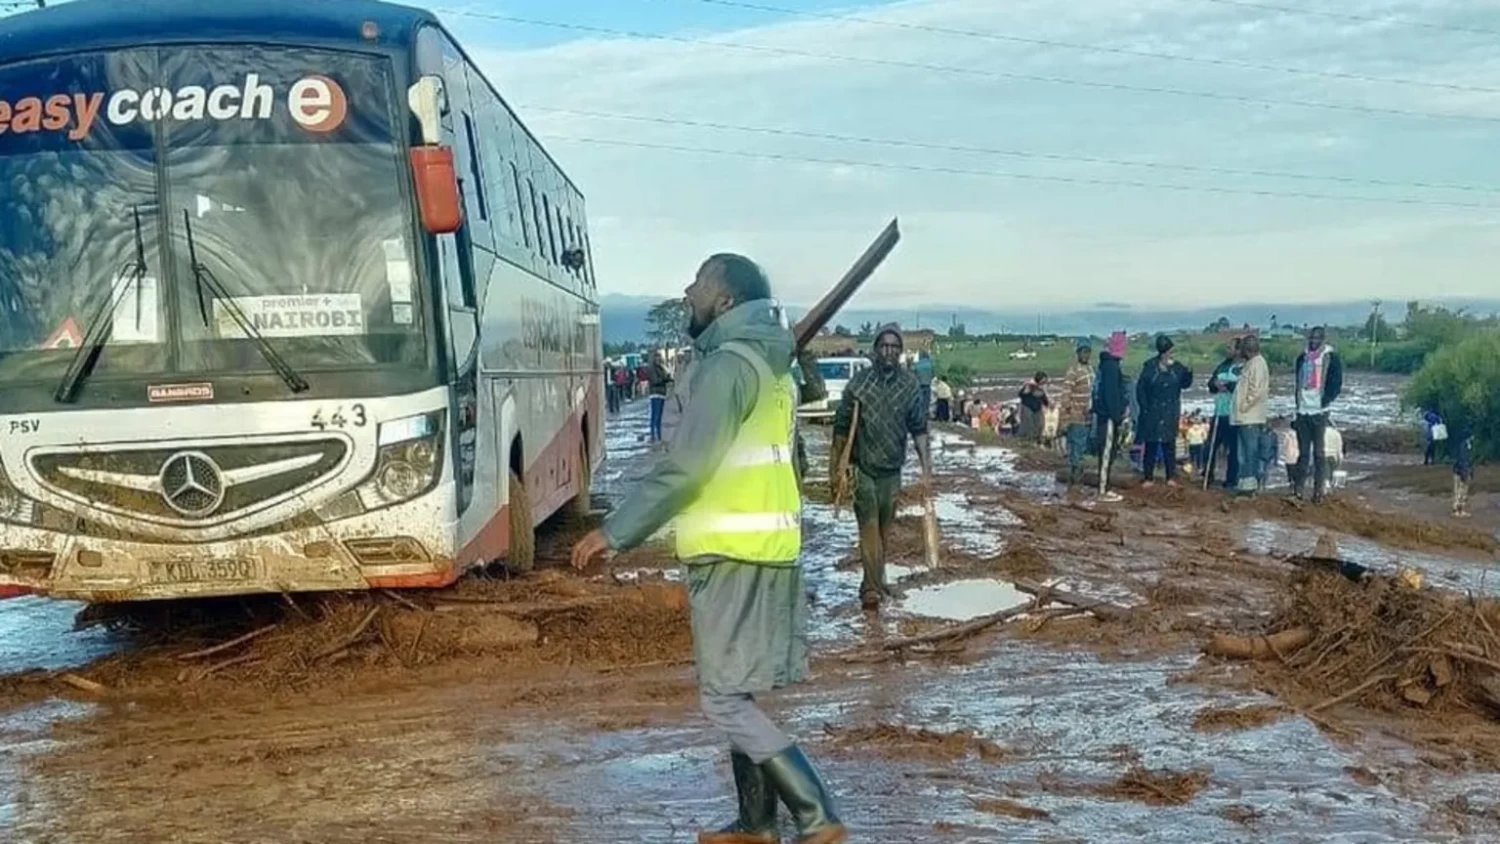 More than 40 killed in Kenya after dam bursts